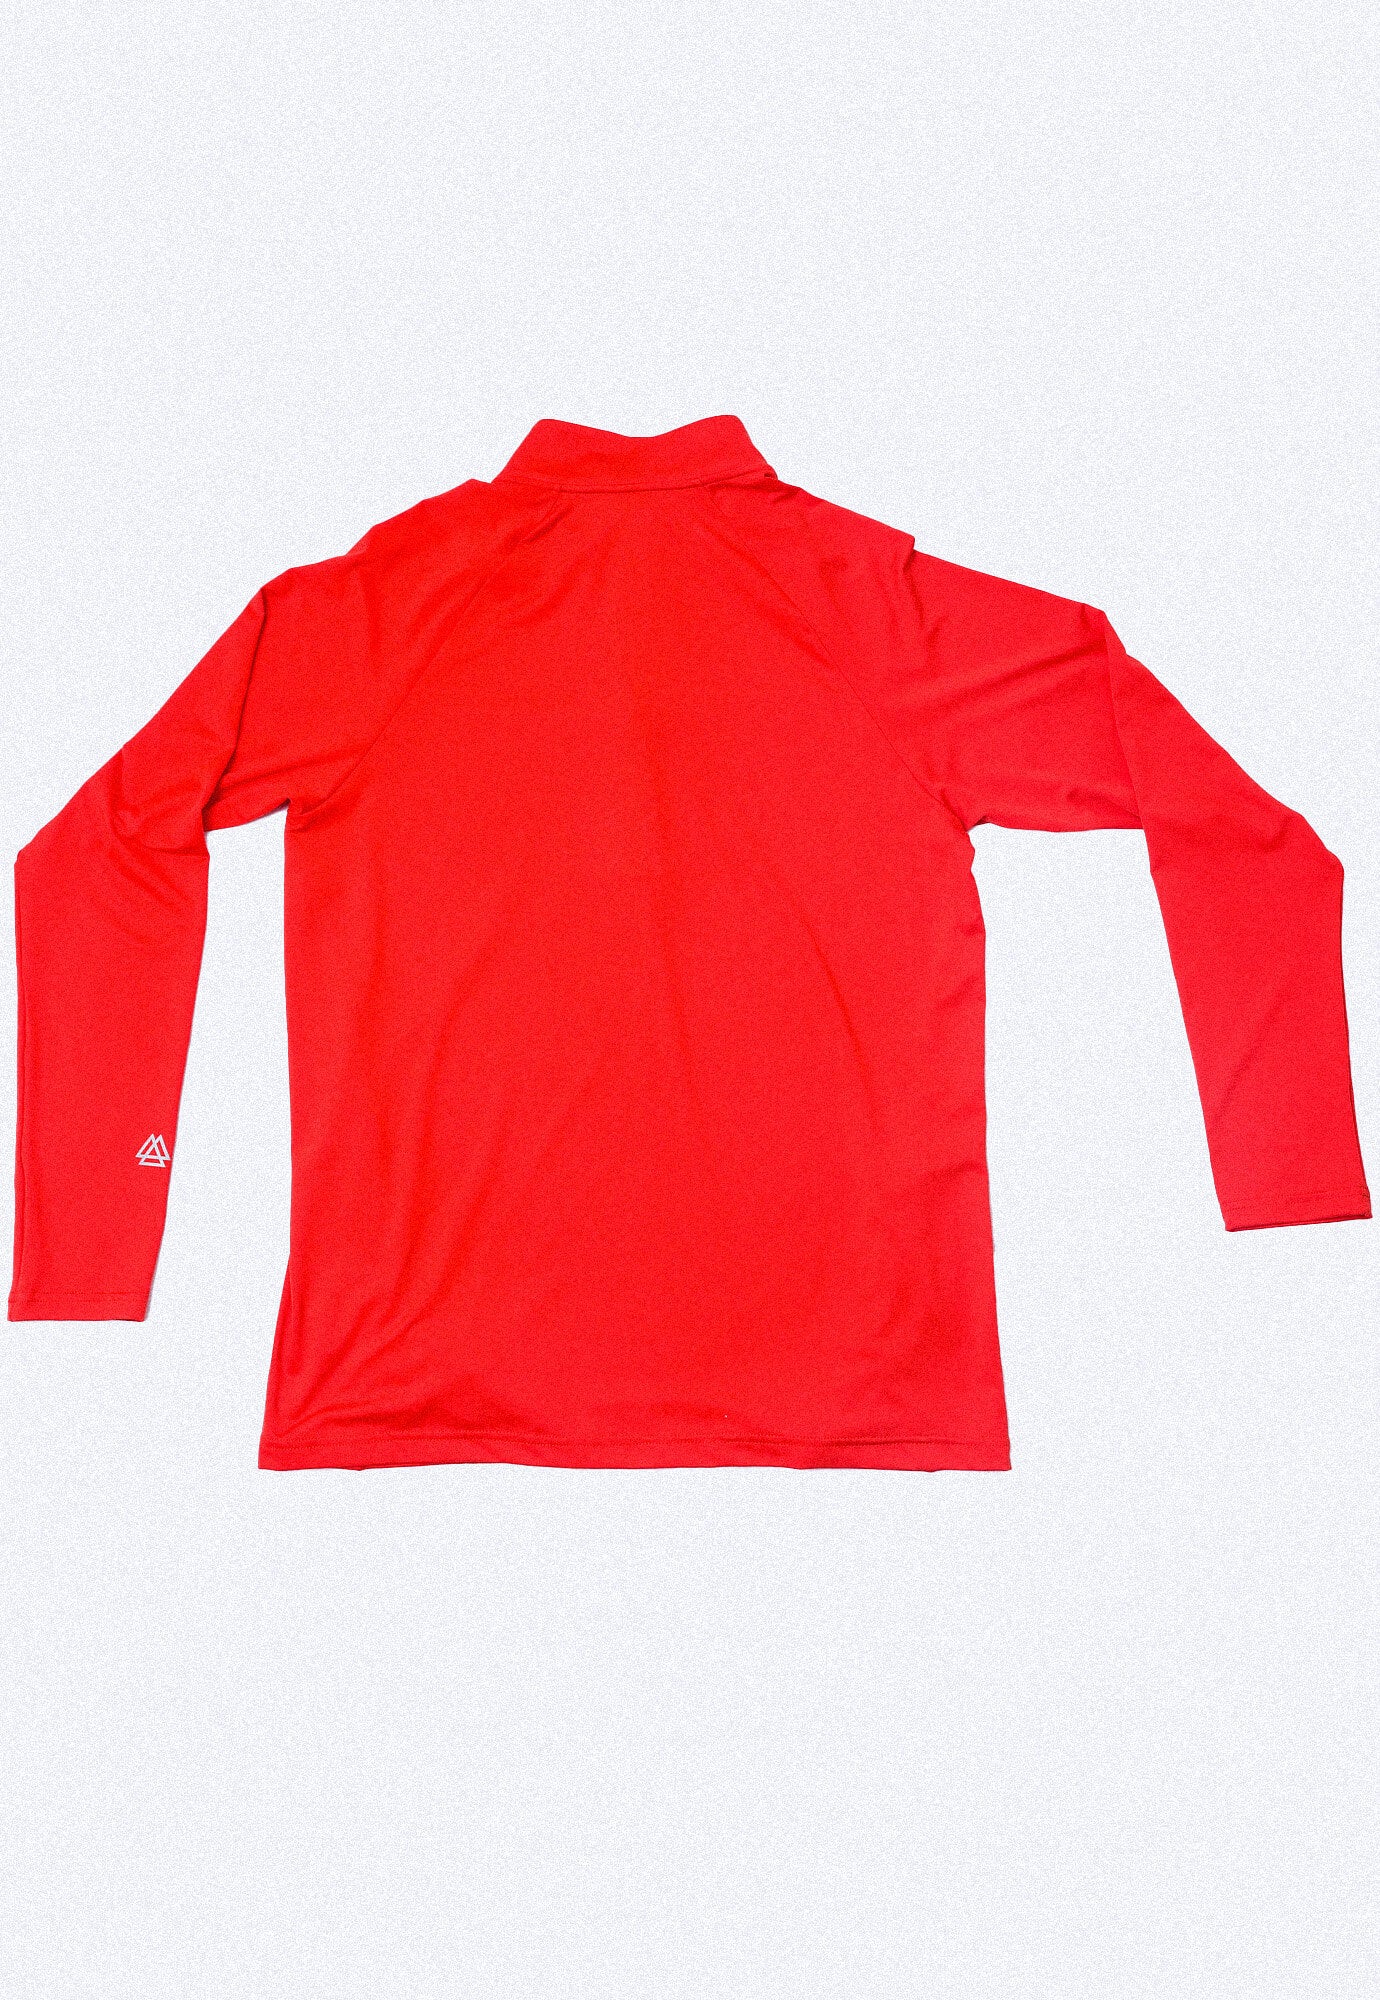 Camiseta deportiva naranja manga larga cierre funcional en frente con detalles reflectivos para hombre